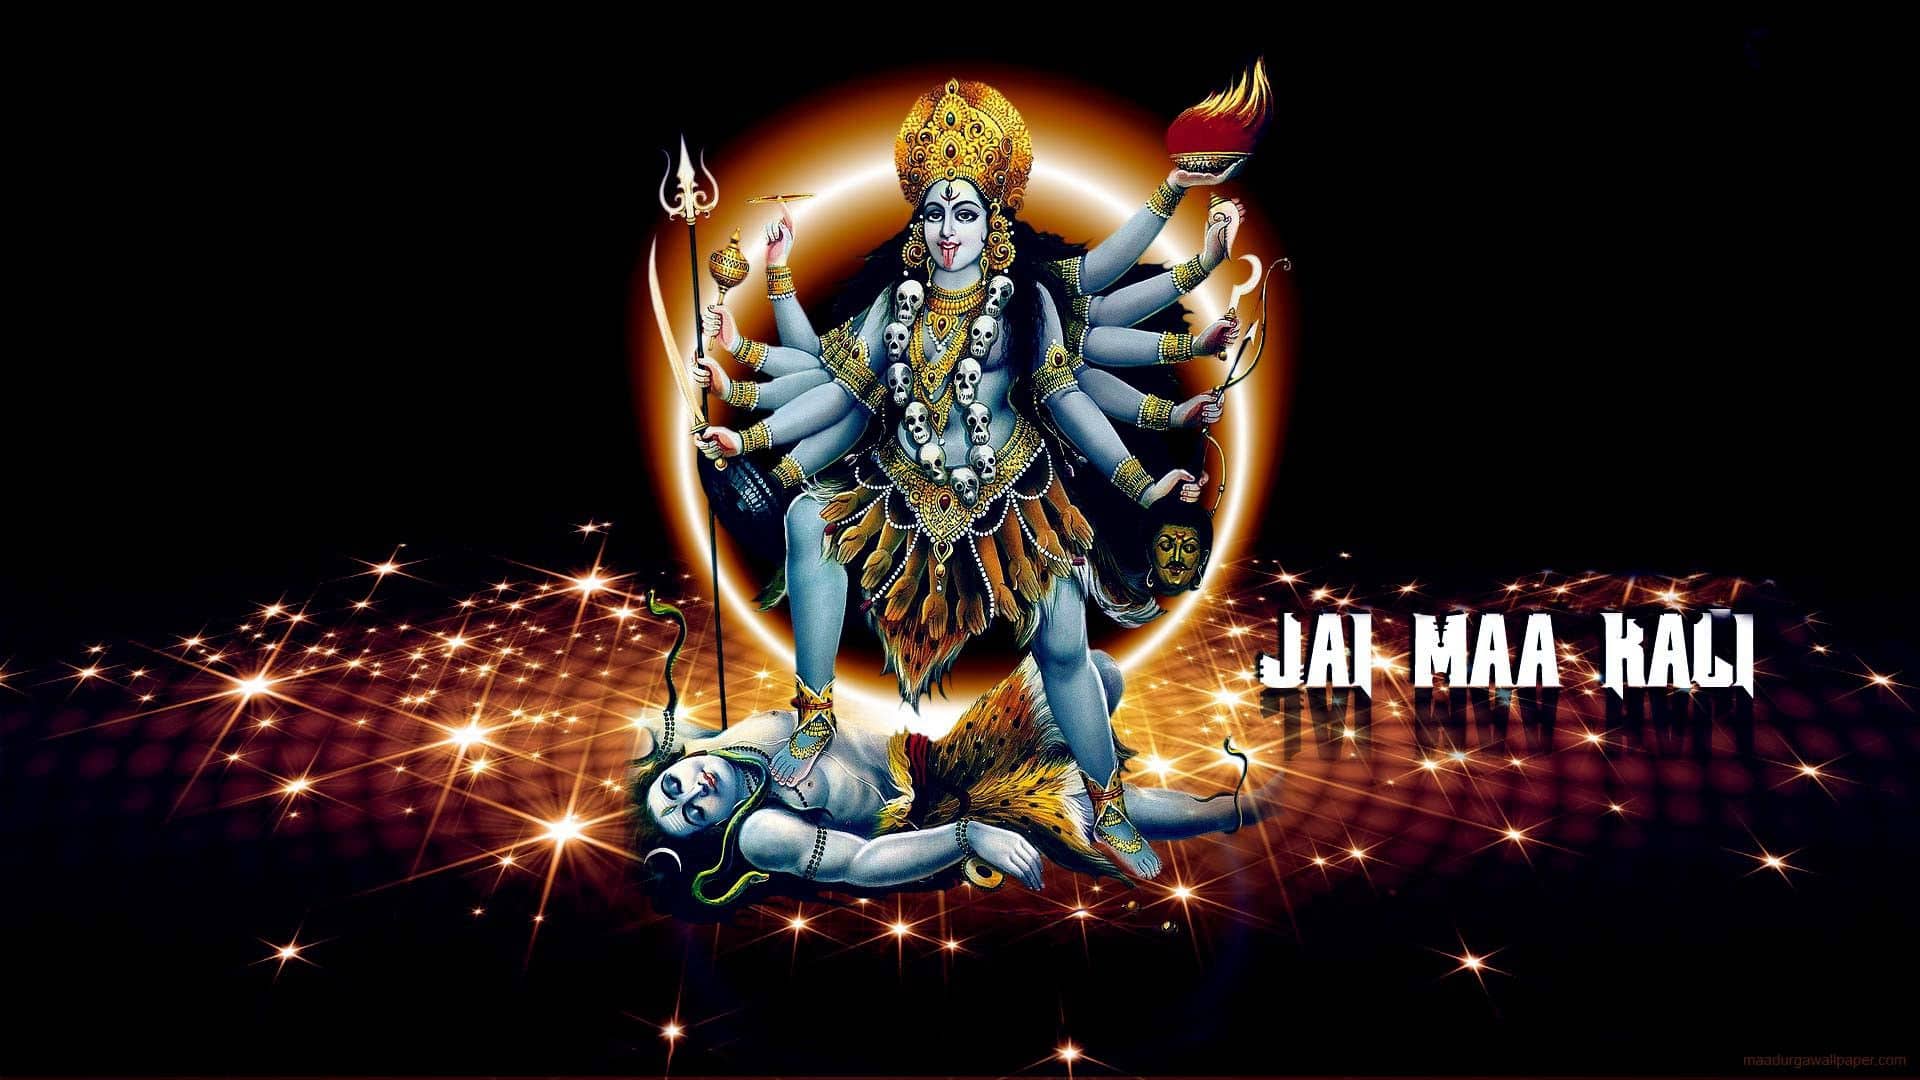 70+] Jai Maa Kali Photo, Image, Pics & Wallpaper (HD)